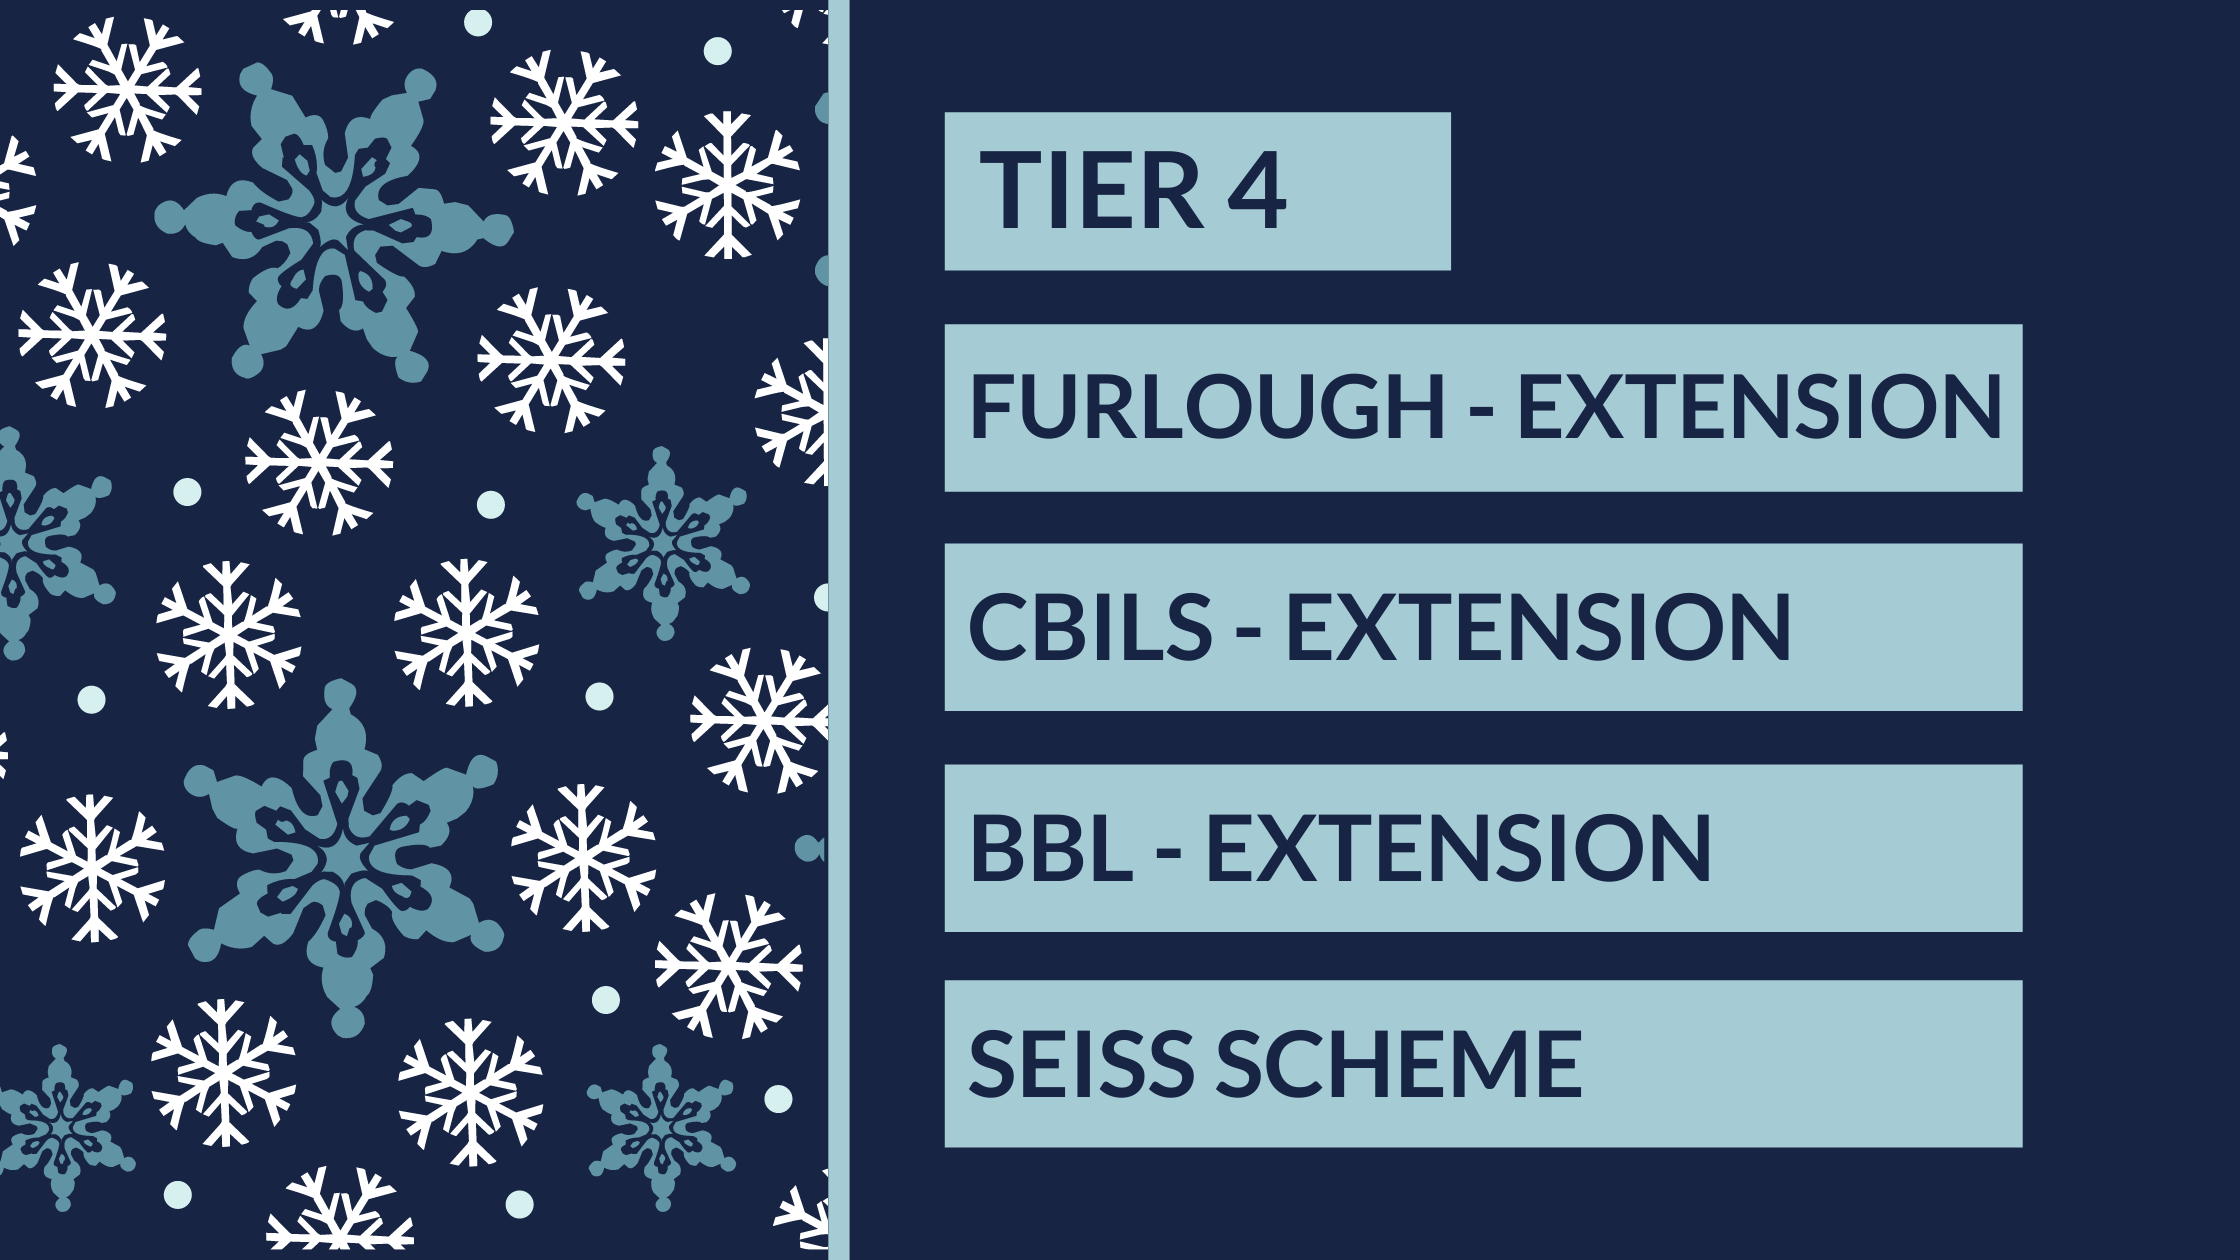 Tier 4 extension